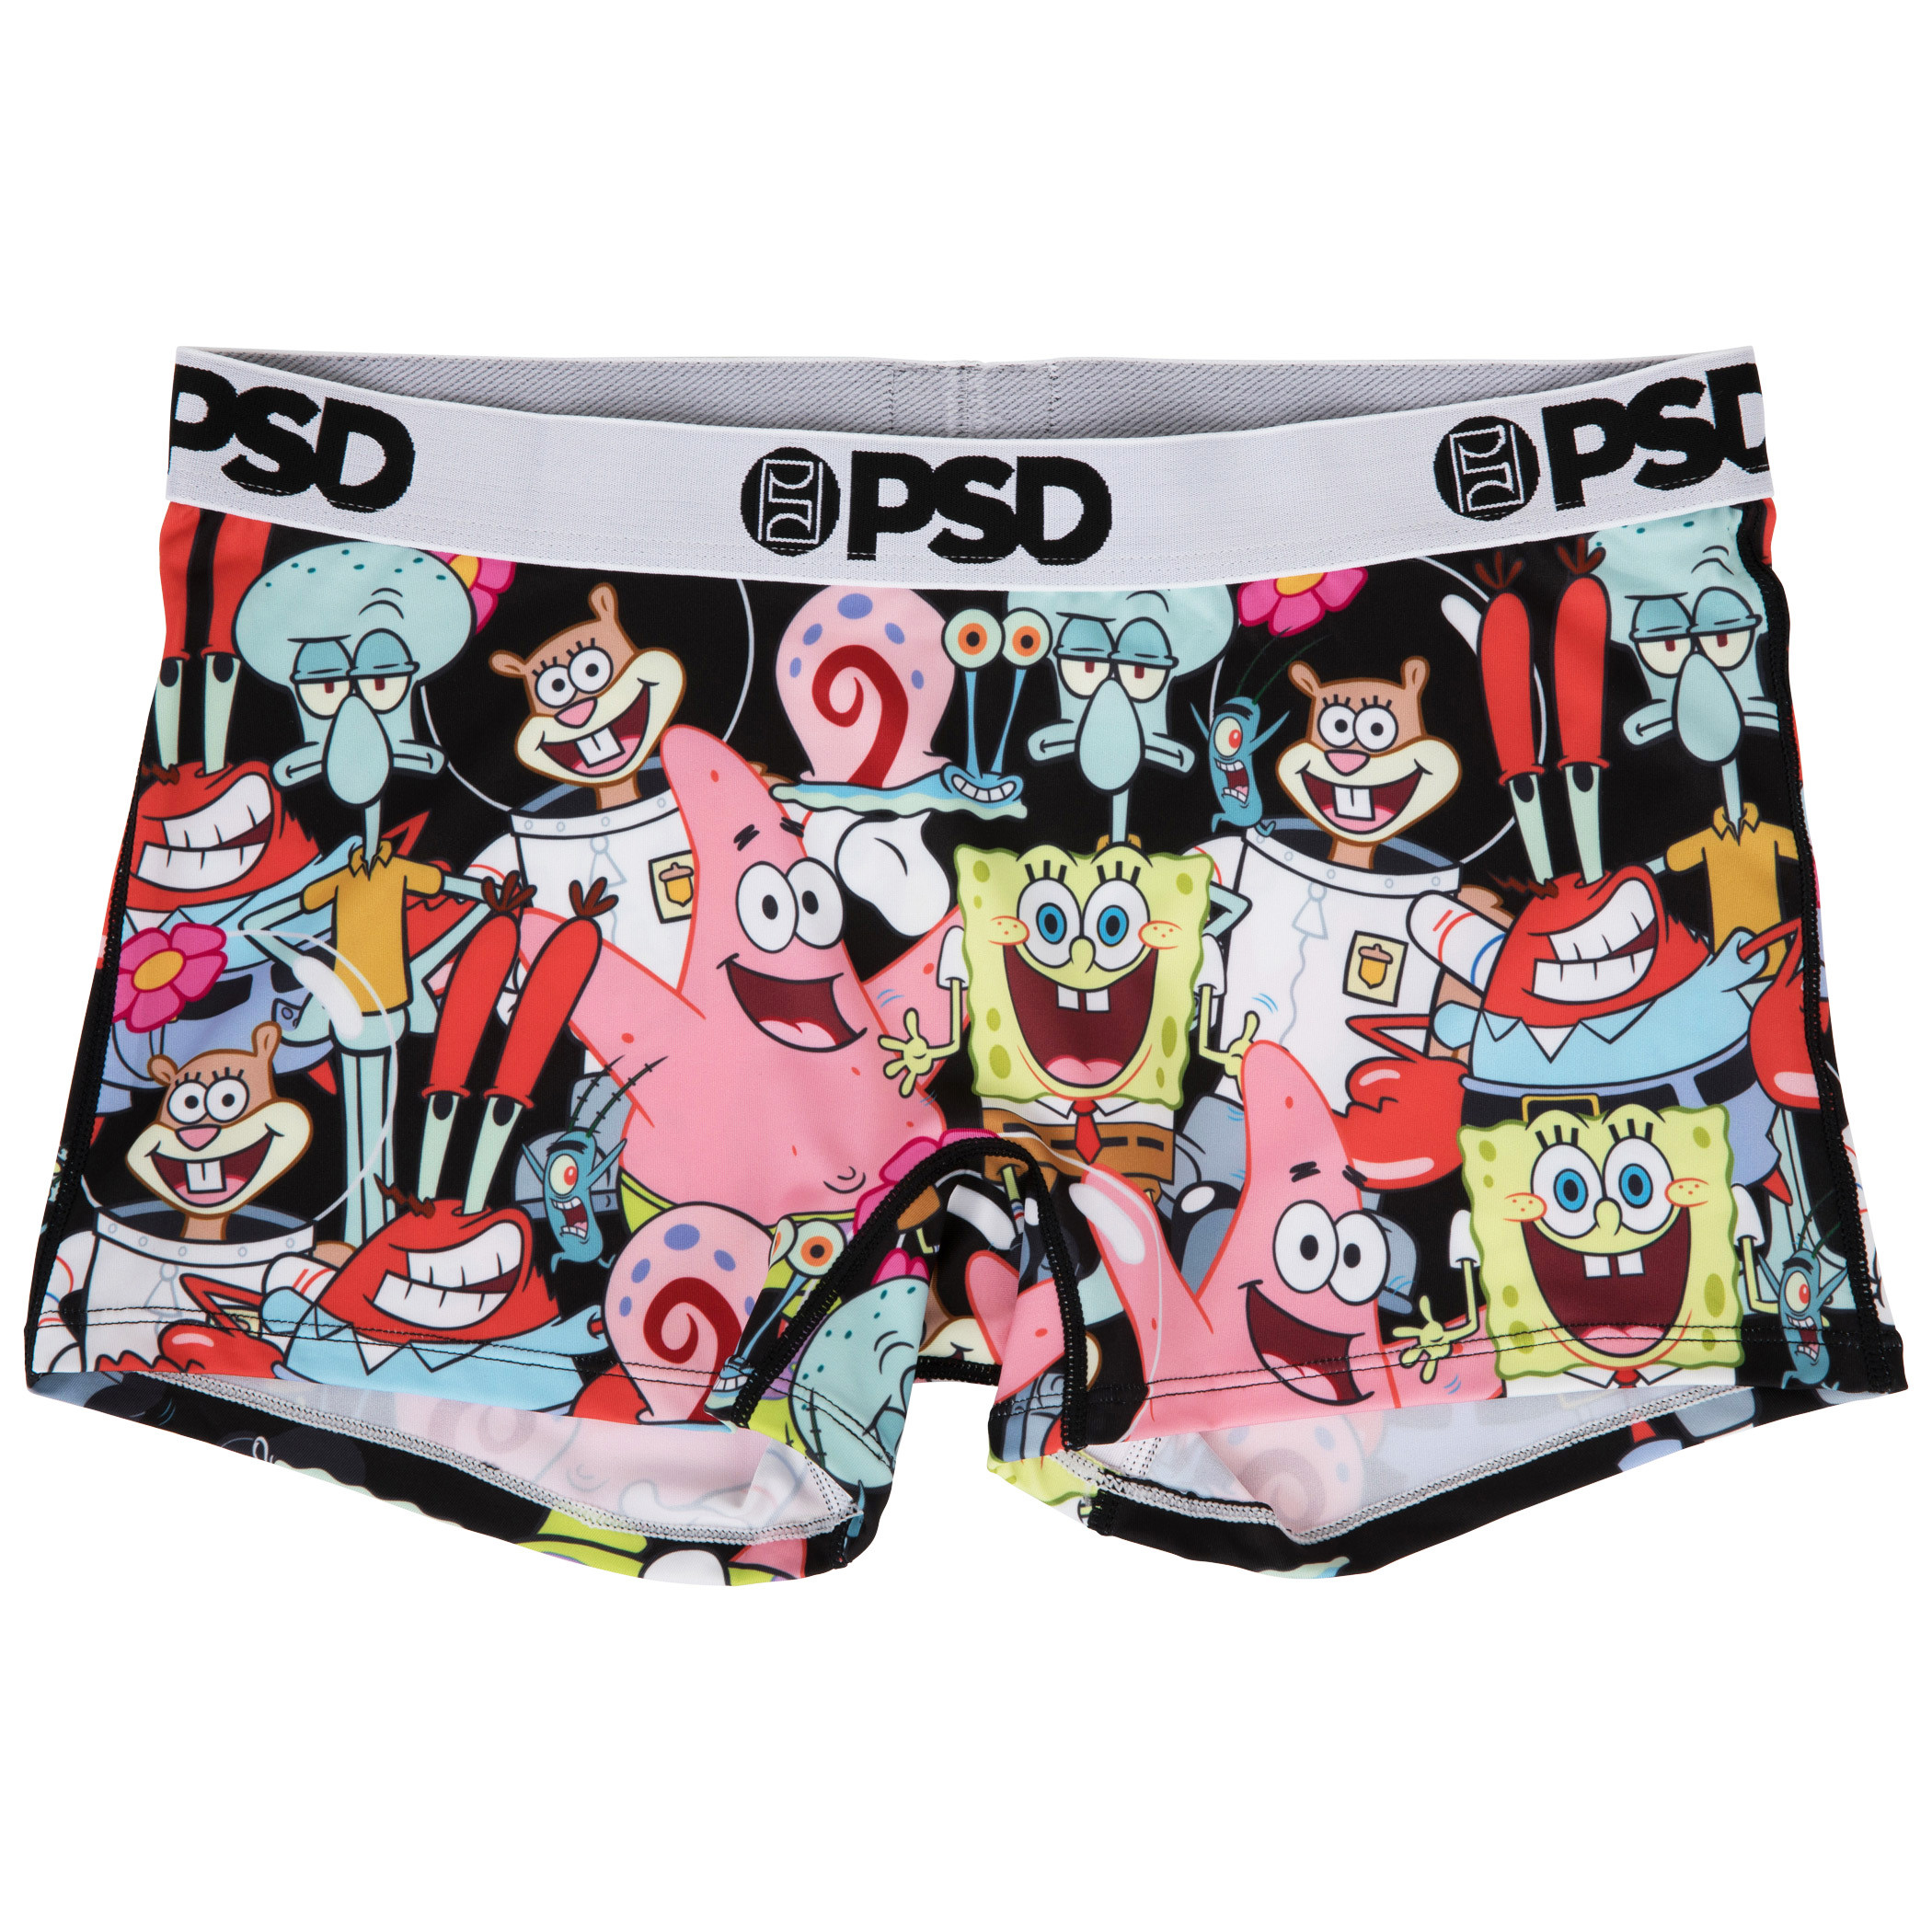 SpongeBob SquarePants Group Selfie PSD Boy Shorts Underwear